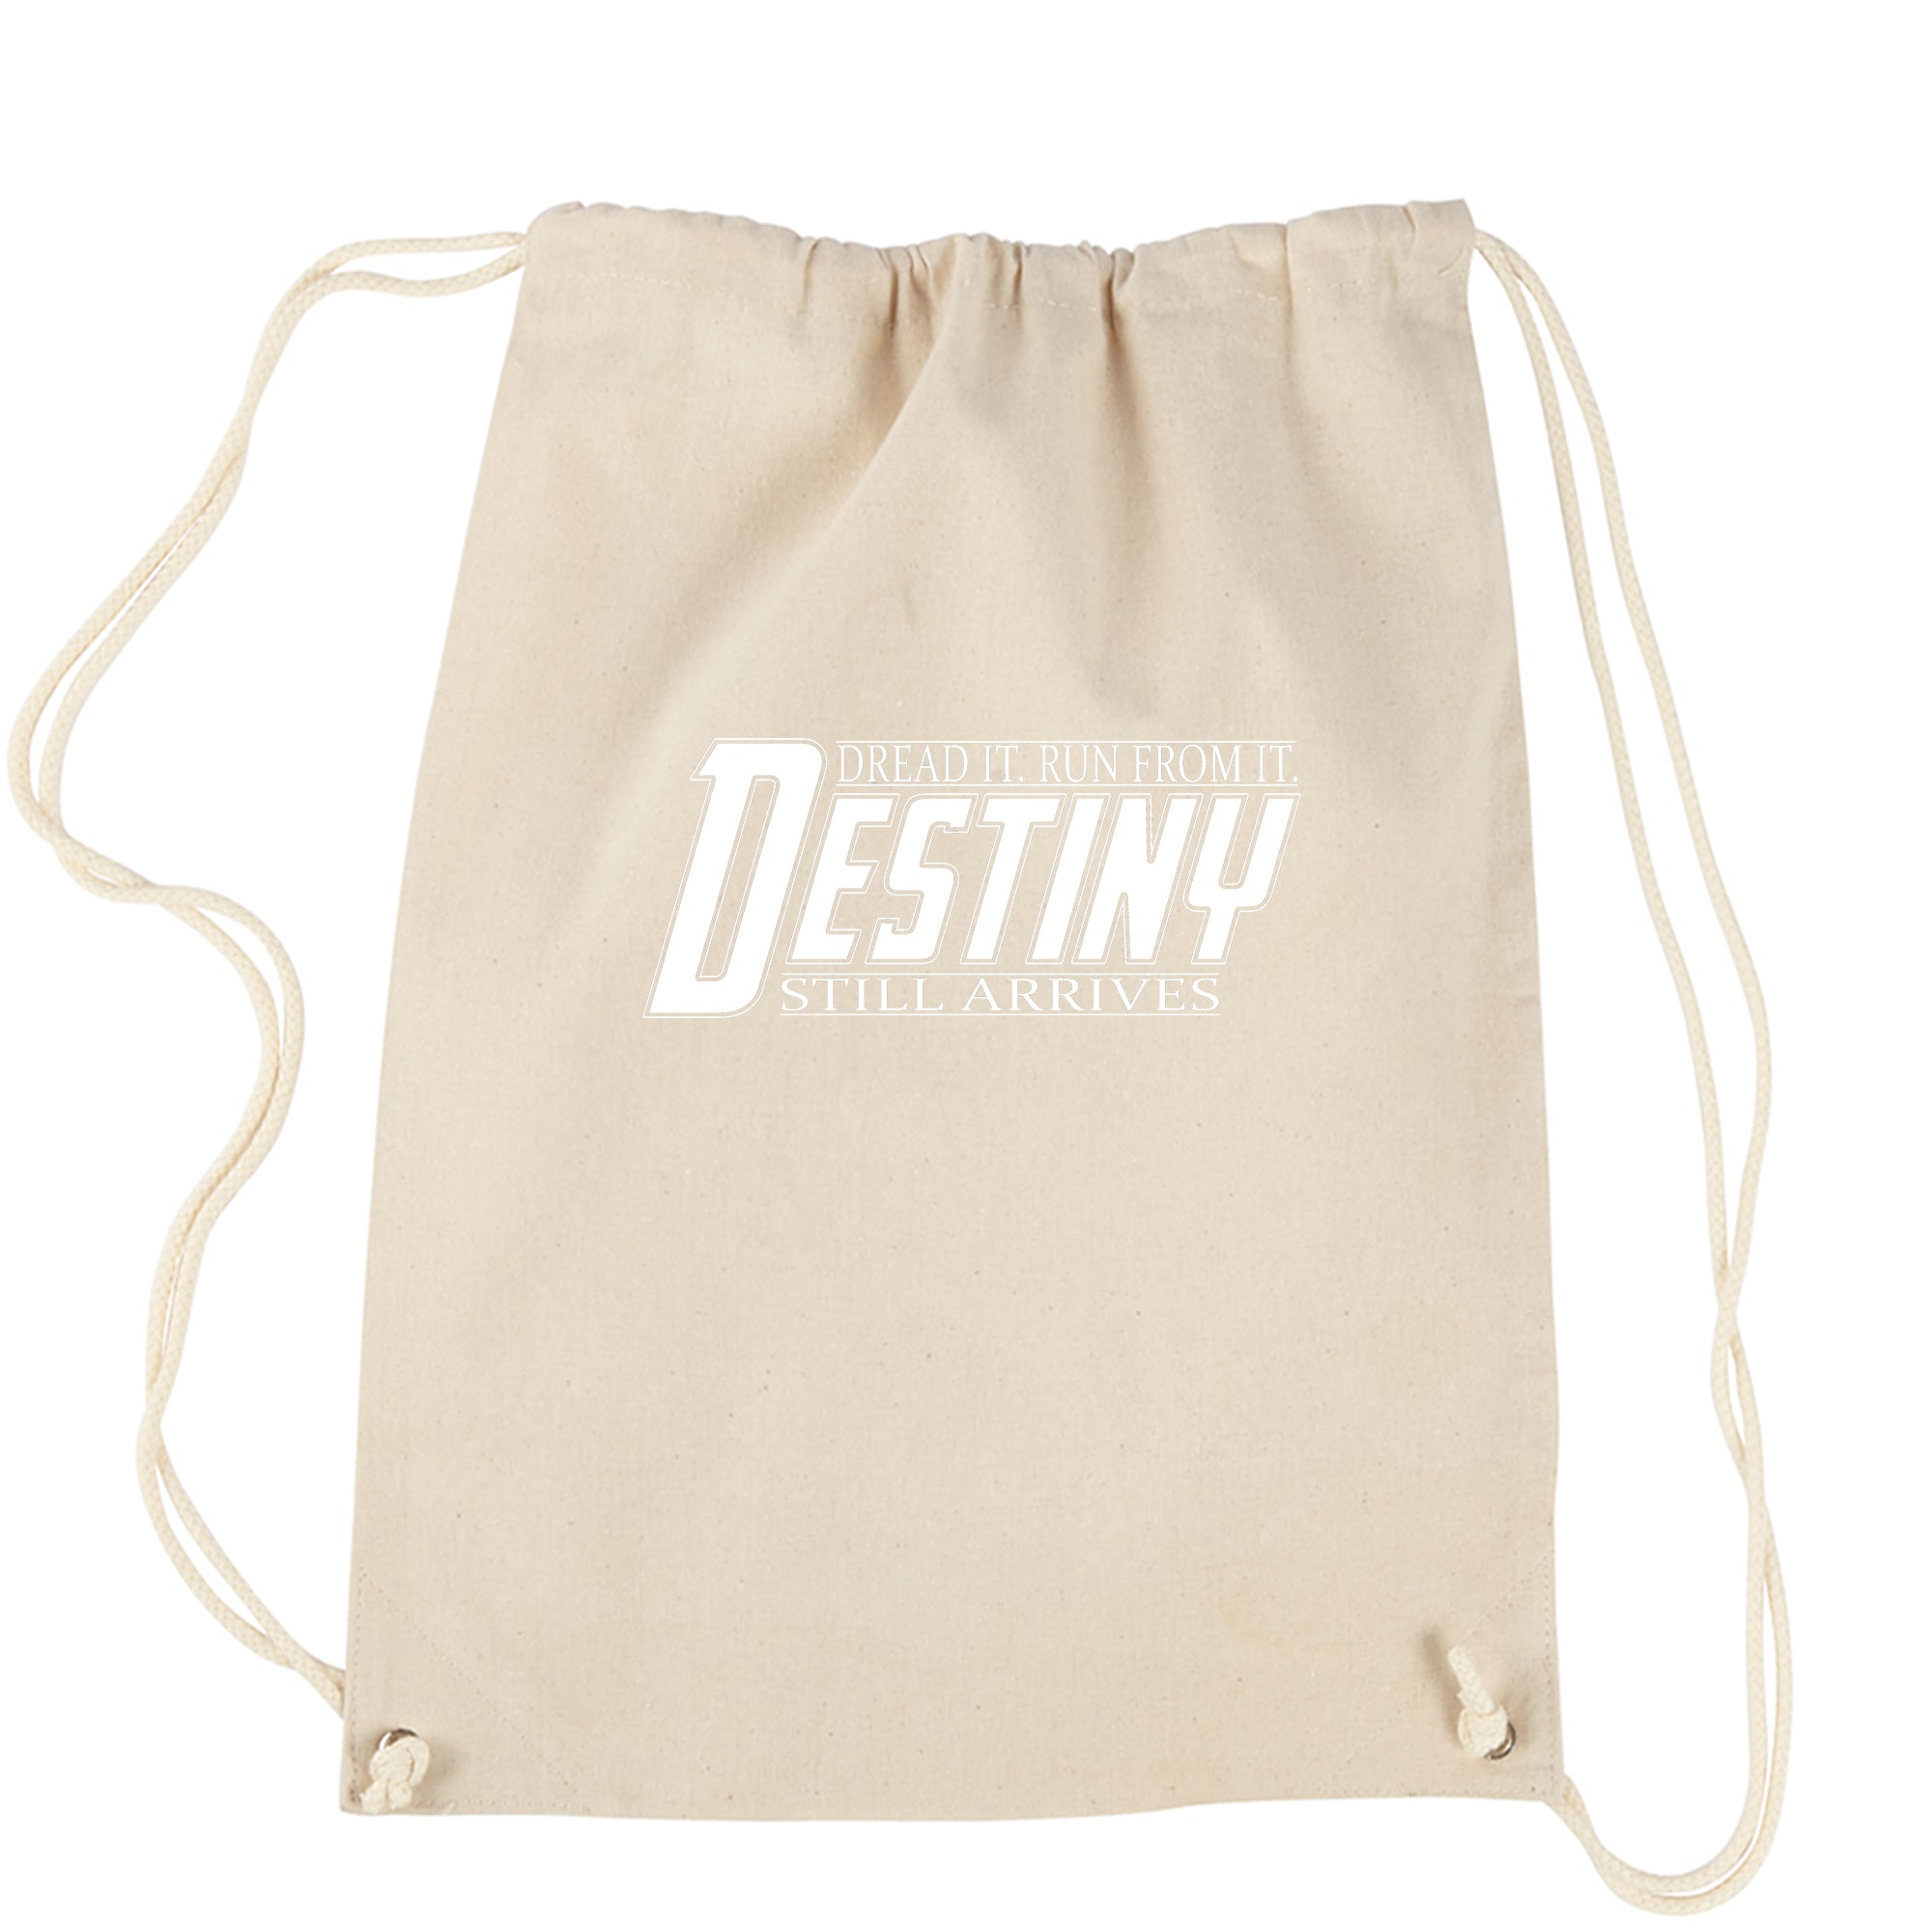 Destiny Arrives Wars of Infinity Drawstring Backpack